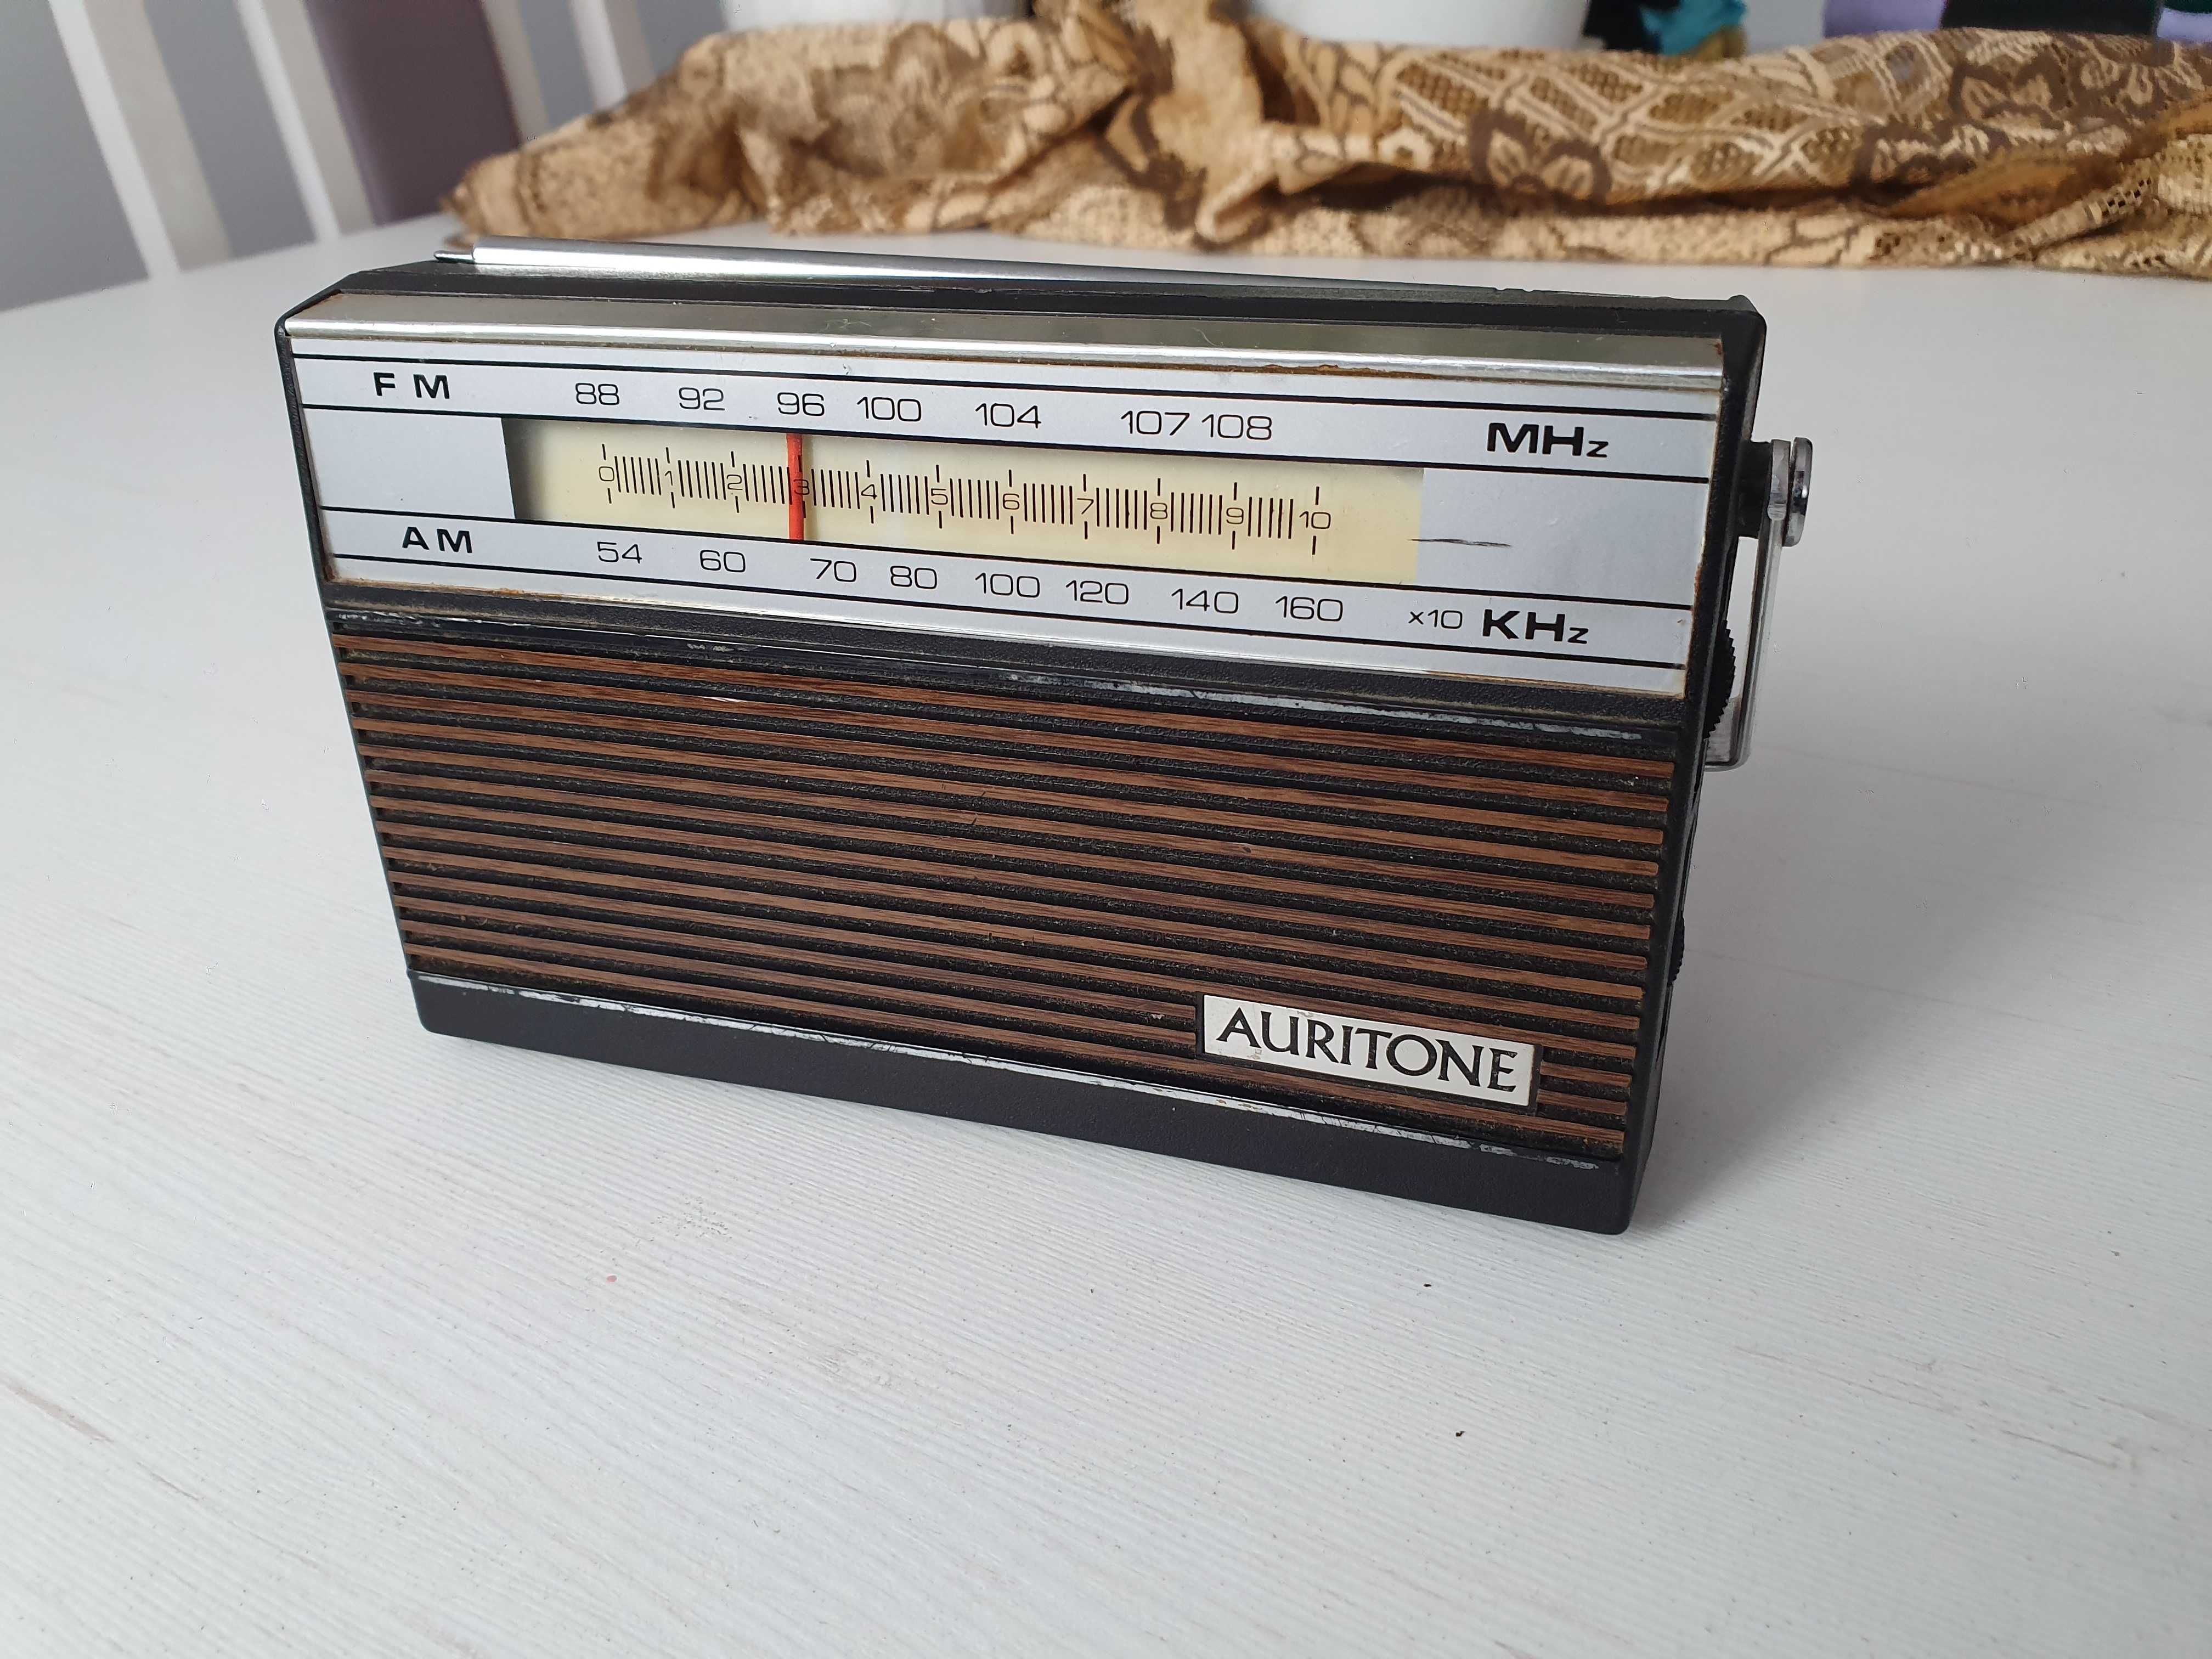 Stare zabytkowe radio Auritone vintage